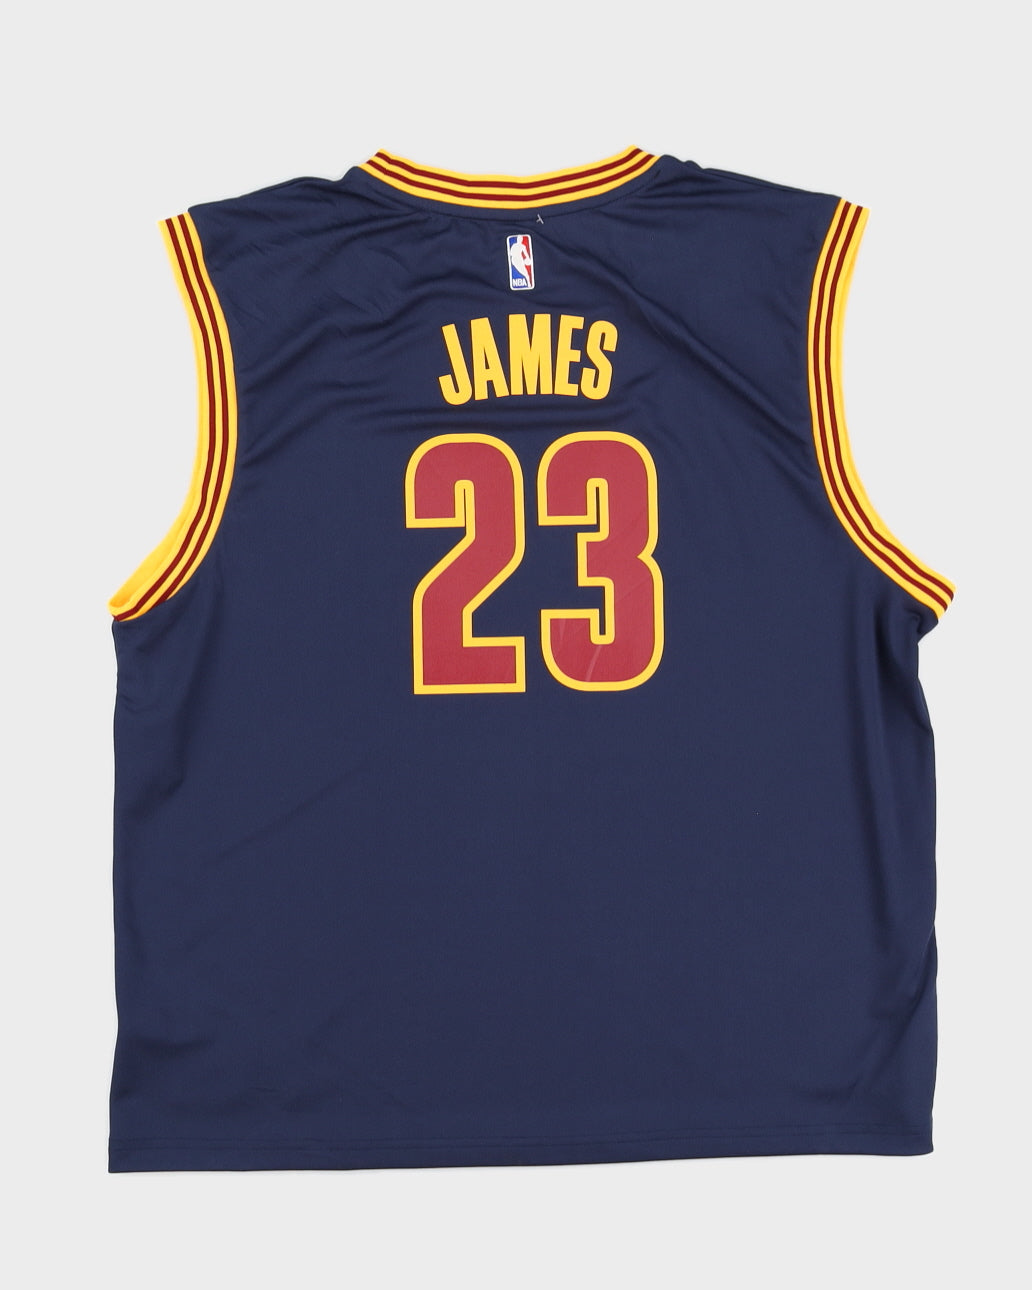 NBA Adidas Cavs Cleveland Cavaliers Lebron James #23 Blue Jersey - XL